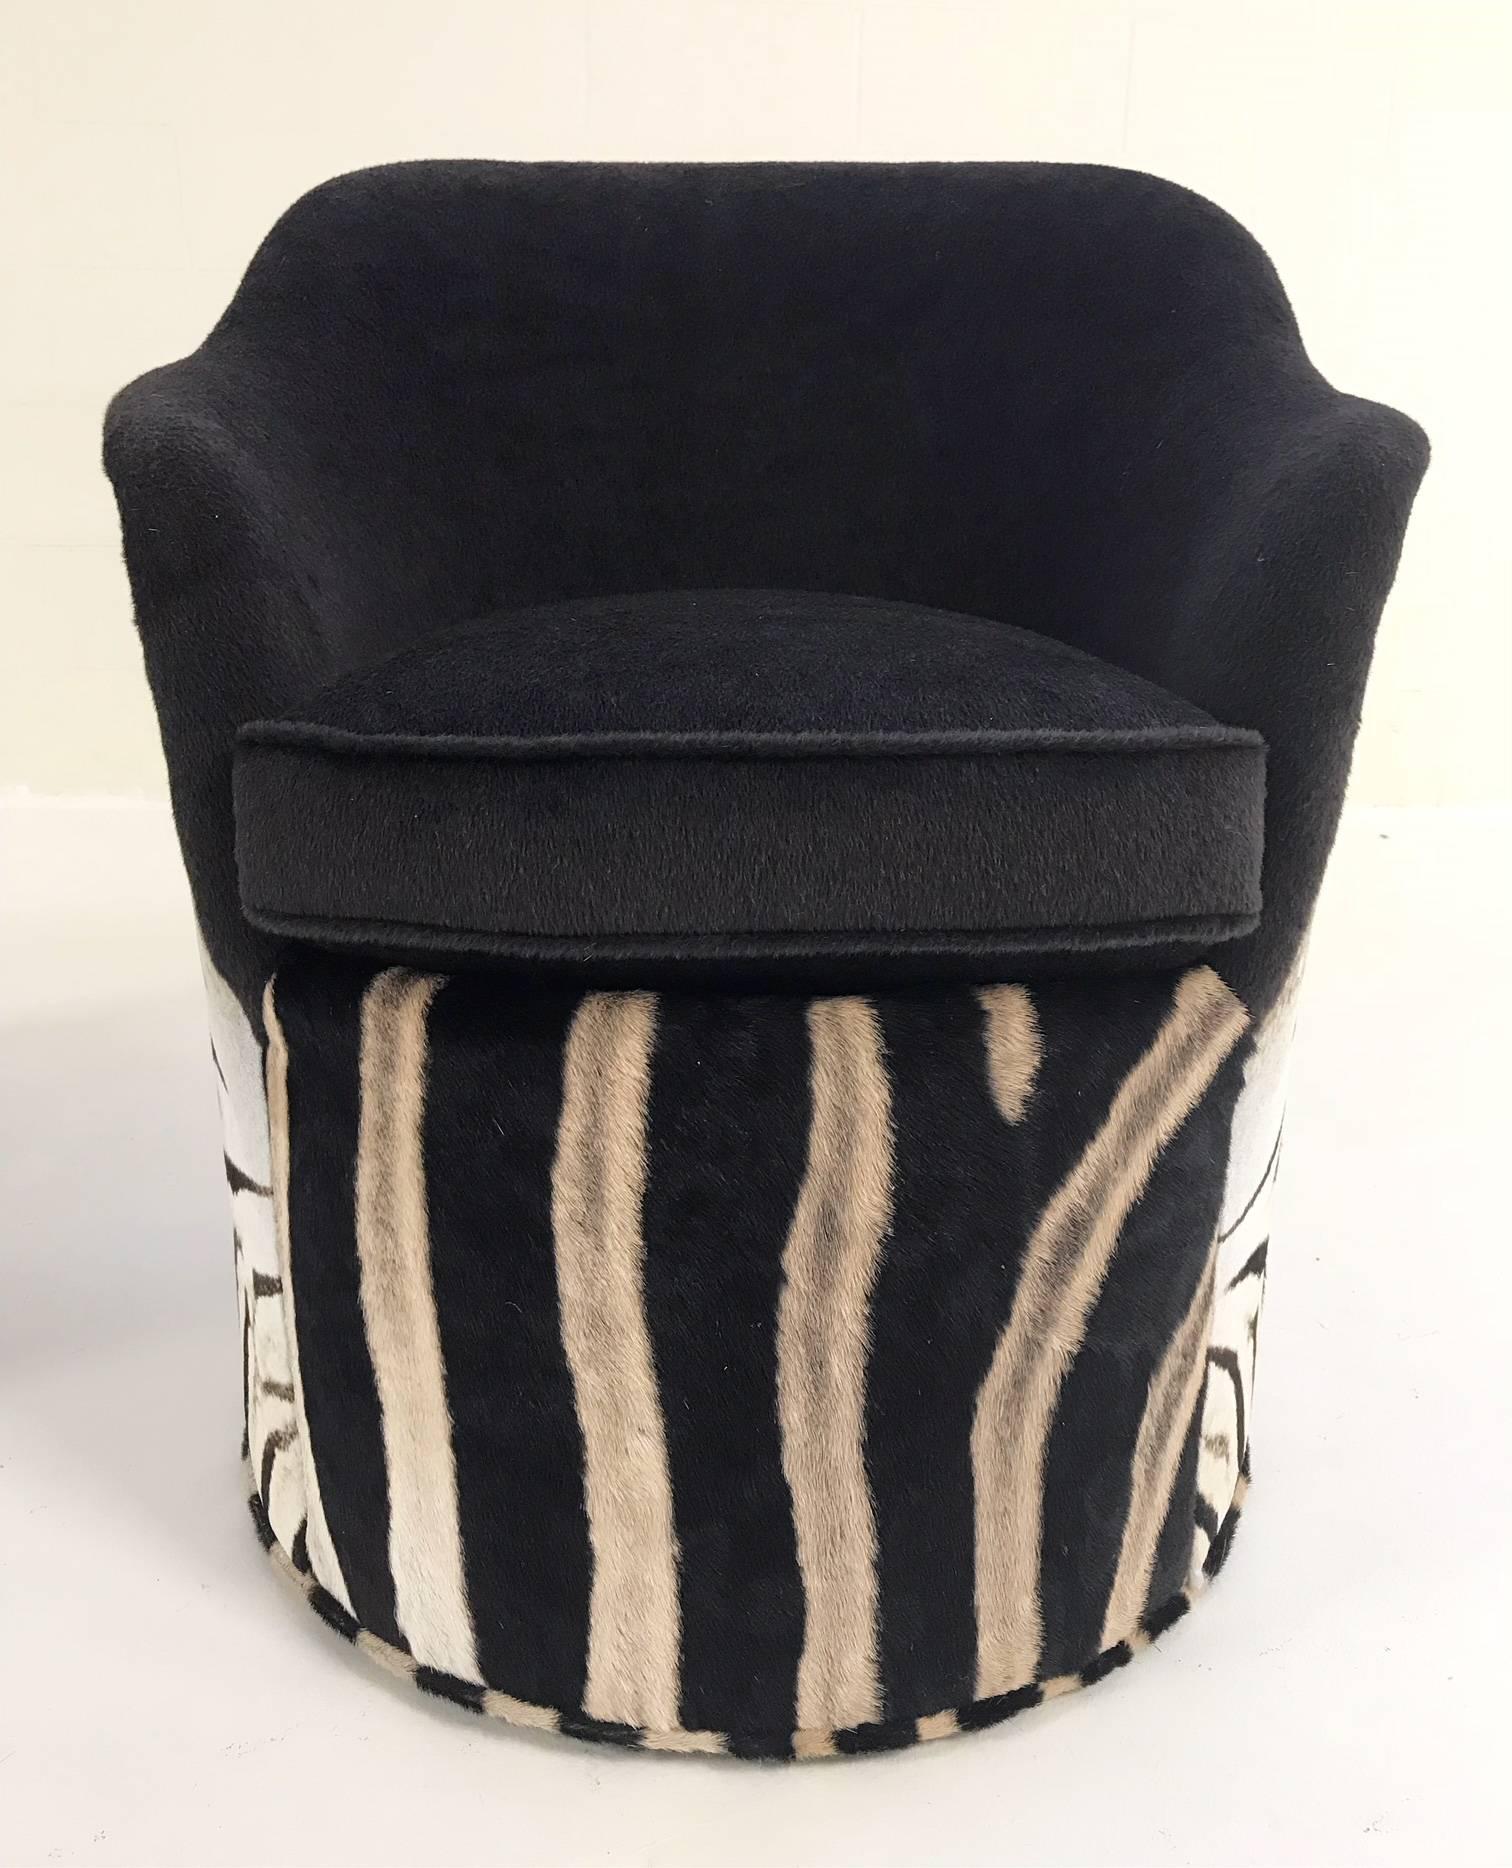 John Saladino for Dunbar Petal Chairs in Zebra and Alpaca Wool - Pair 1